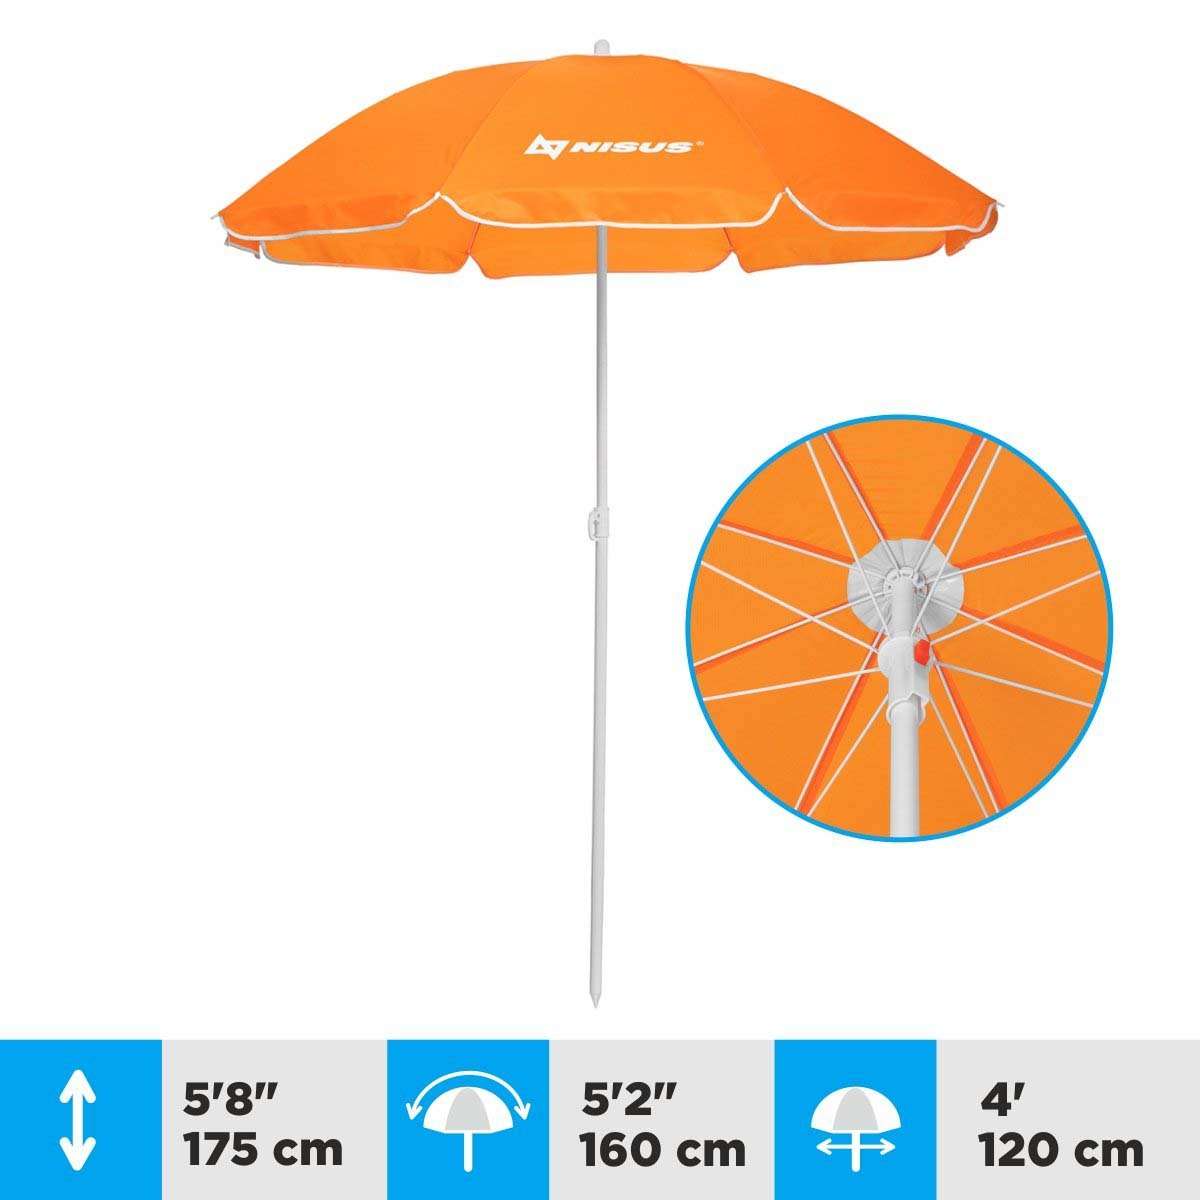 A 4 ft Orange Folding Beach Umbrella is 5.8 ft high